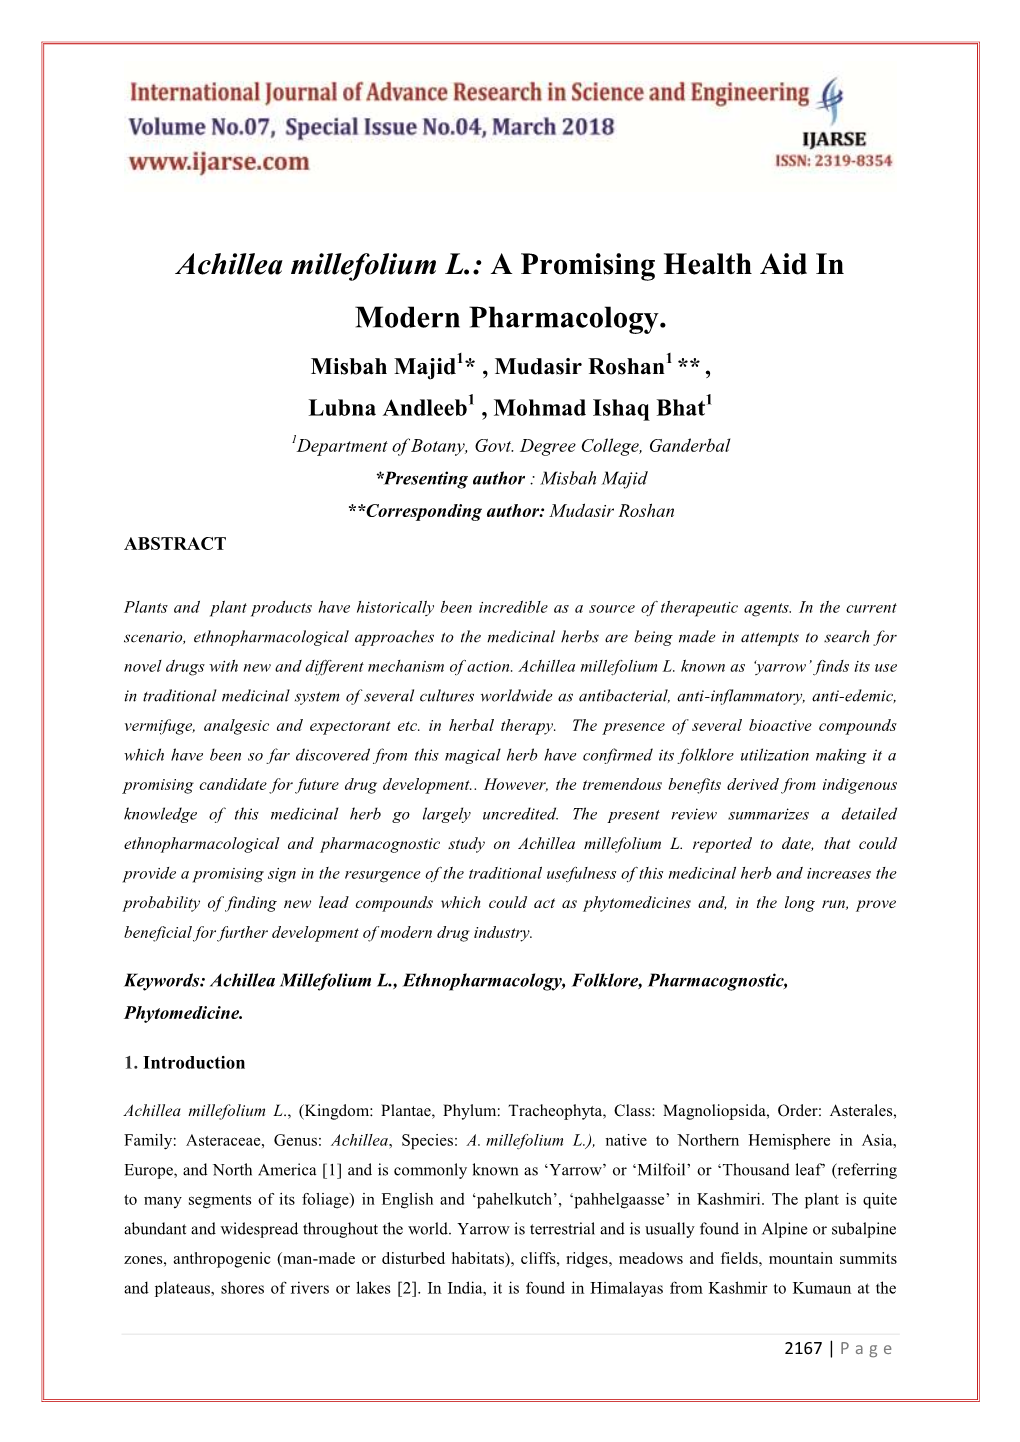 Achillea Millefolium L.: a Promising Health Aid in Modern Pharmacology